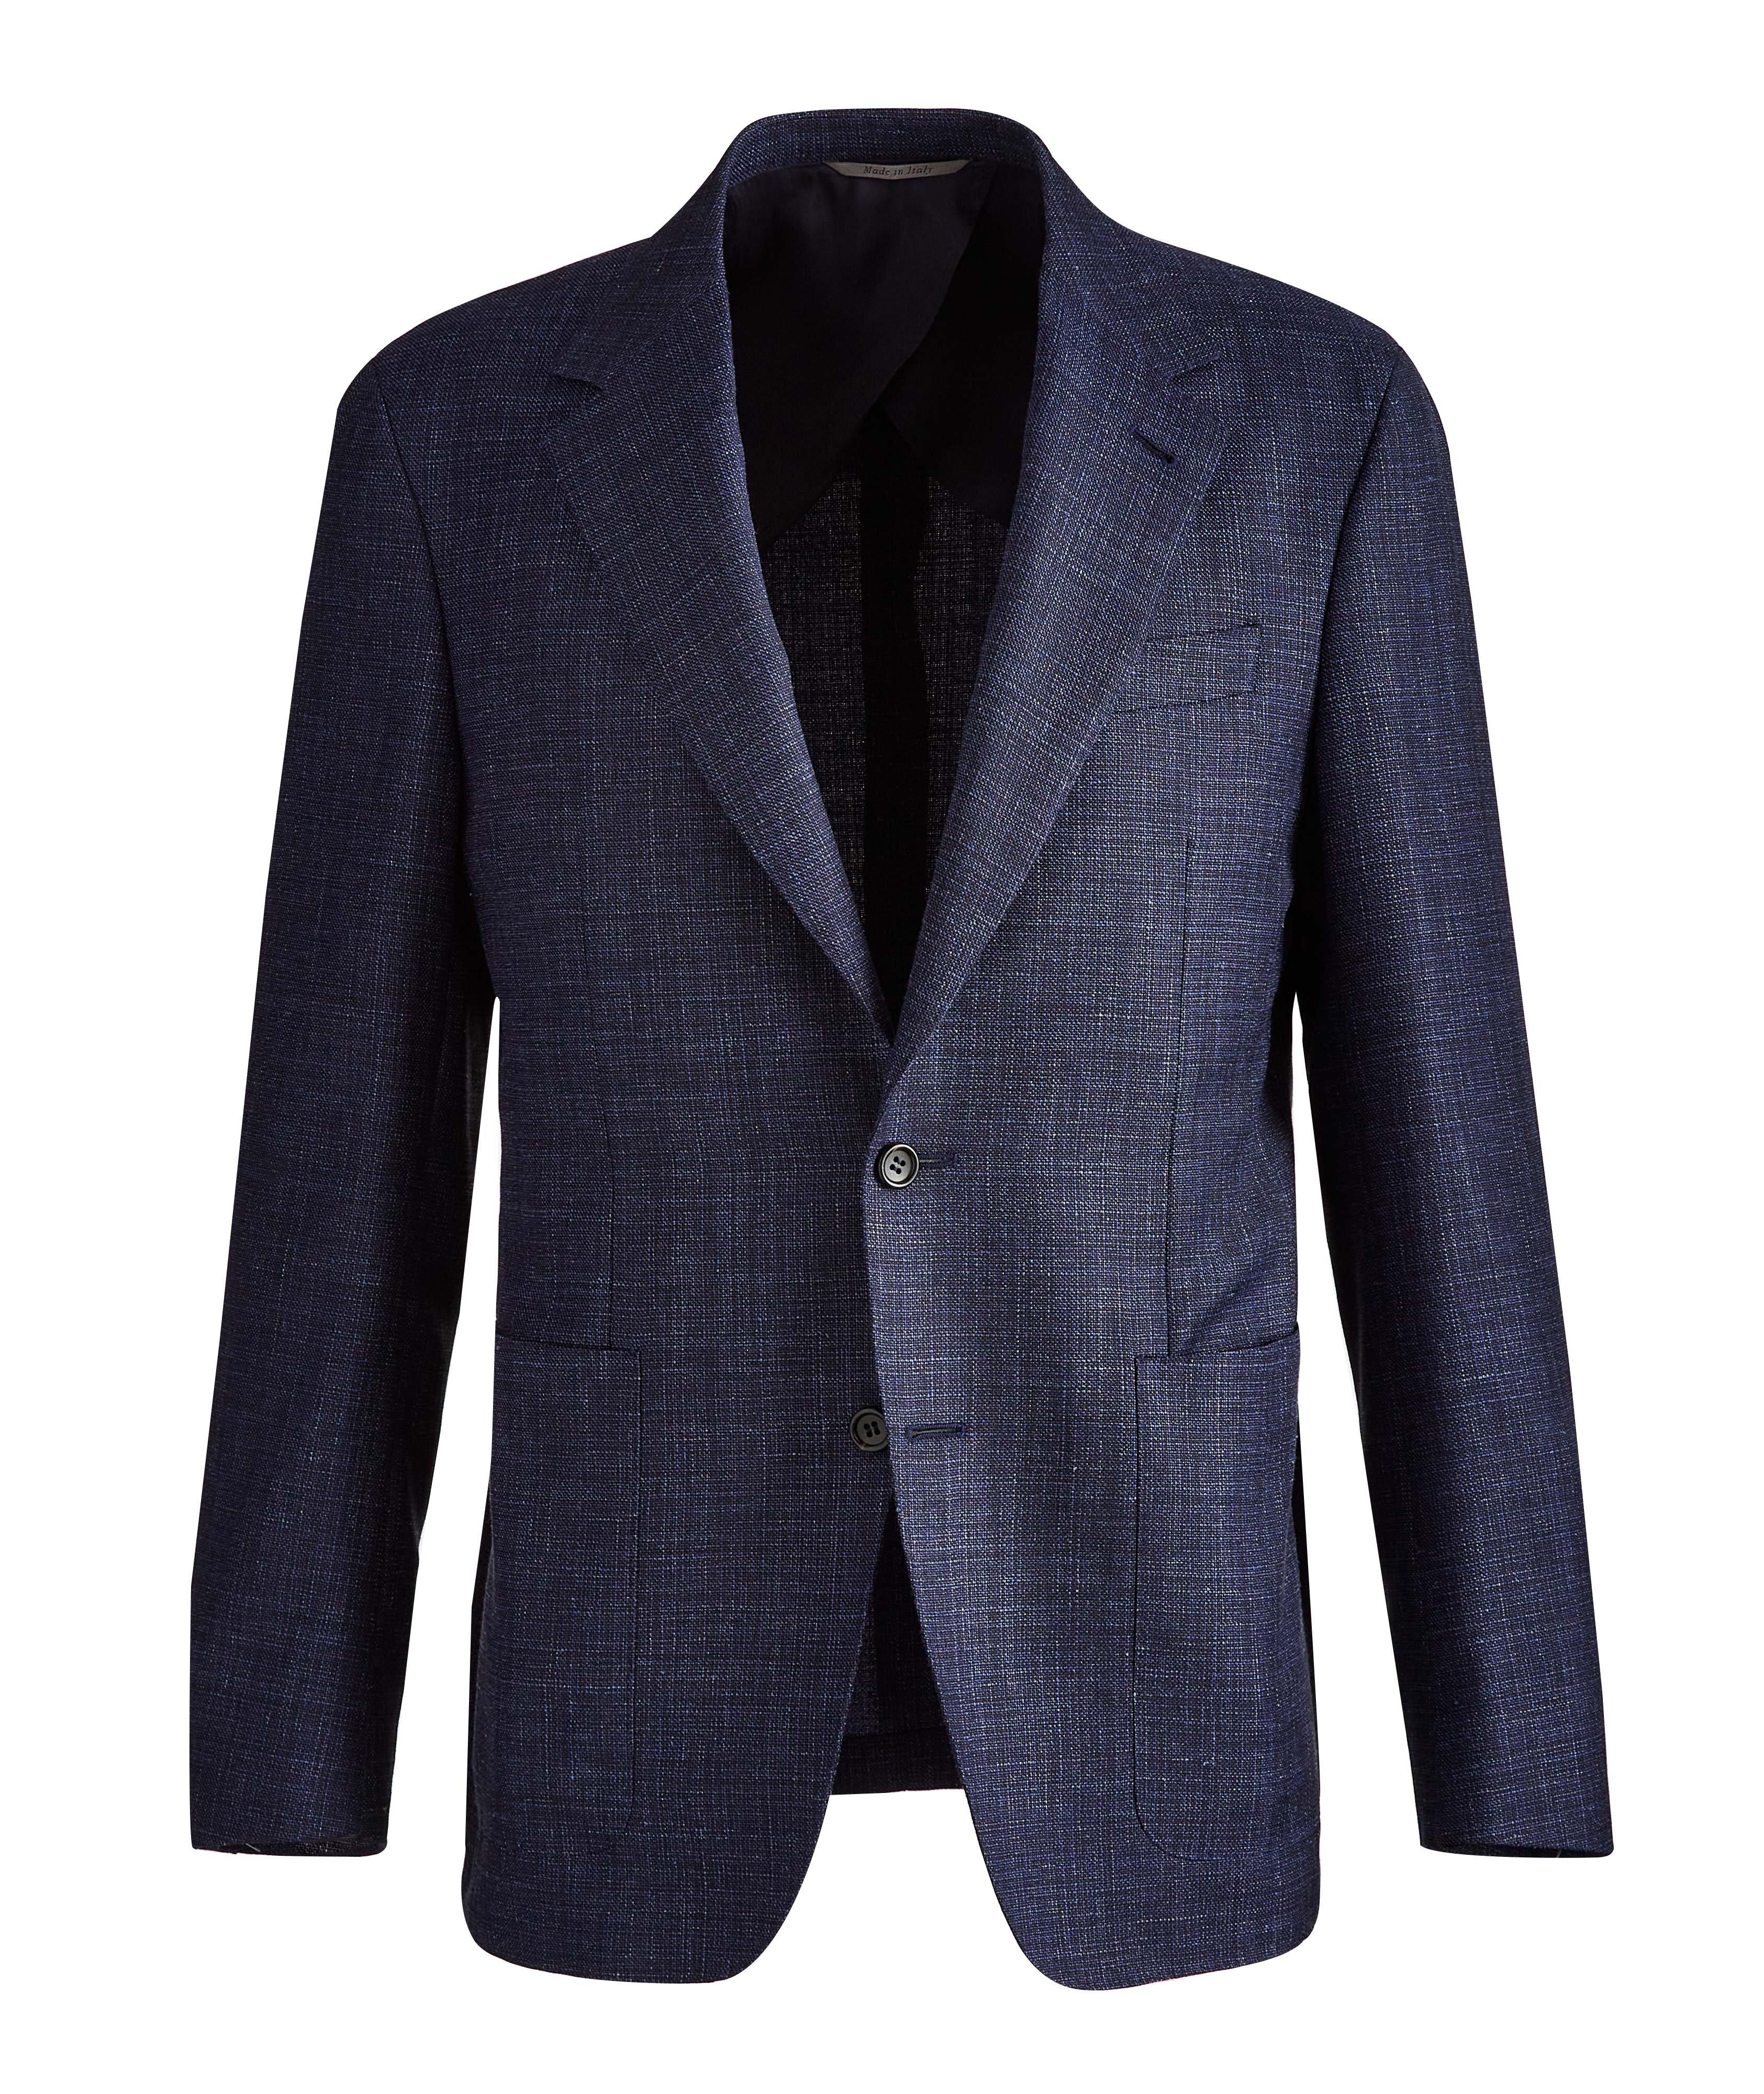 Mélange Wool, Silk & Linen Sports Jacket image 0